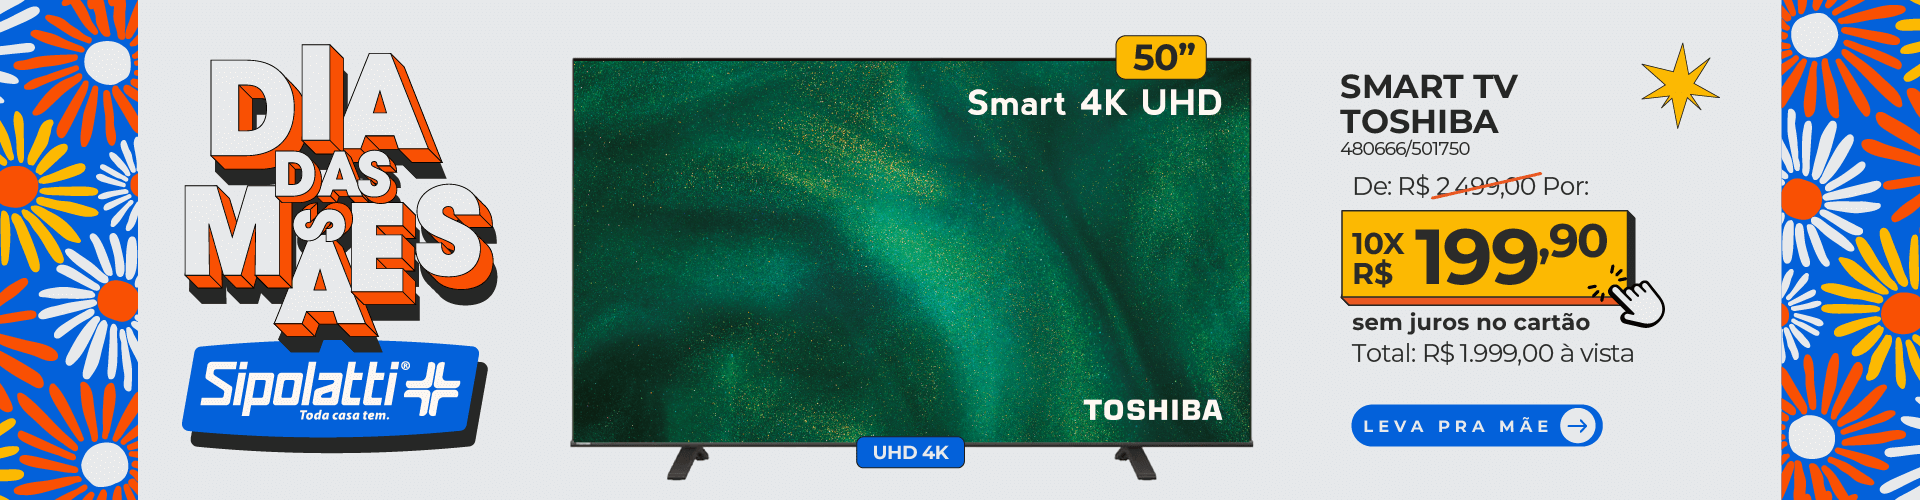 Smart TV Toshiba 50" DLED 4K TB022M Dolby Audio